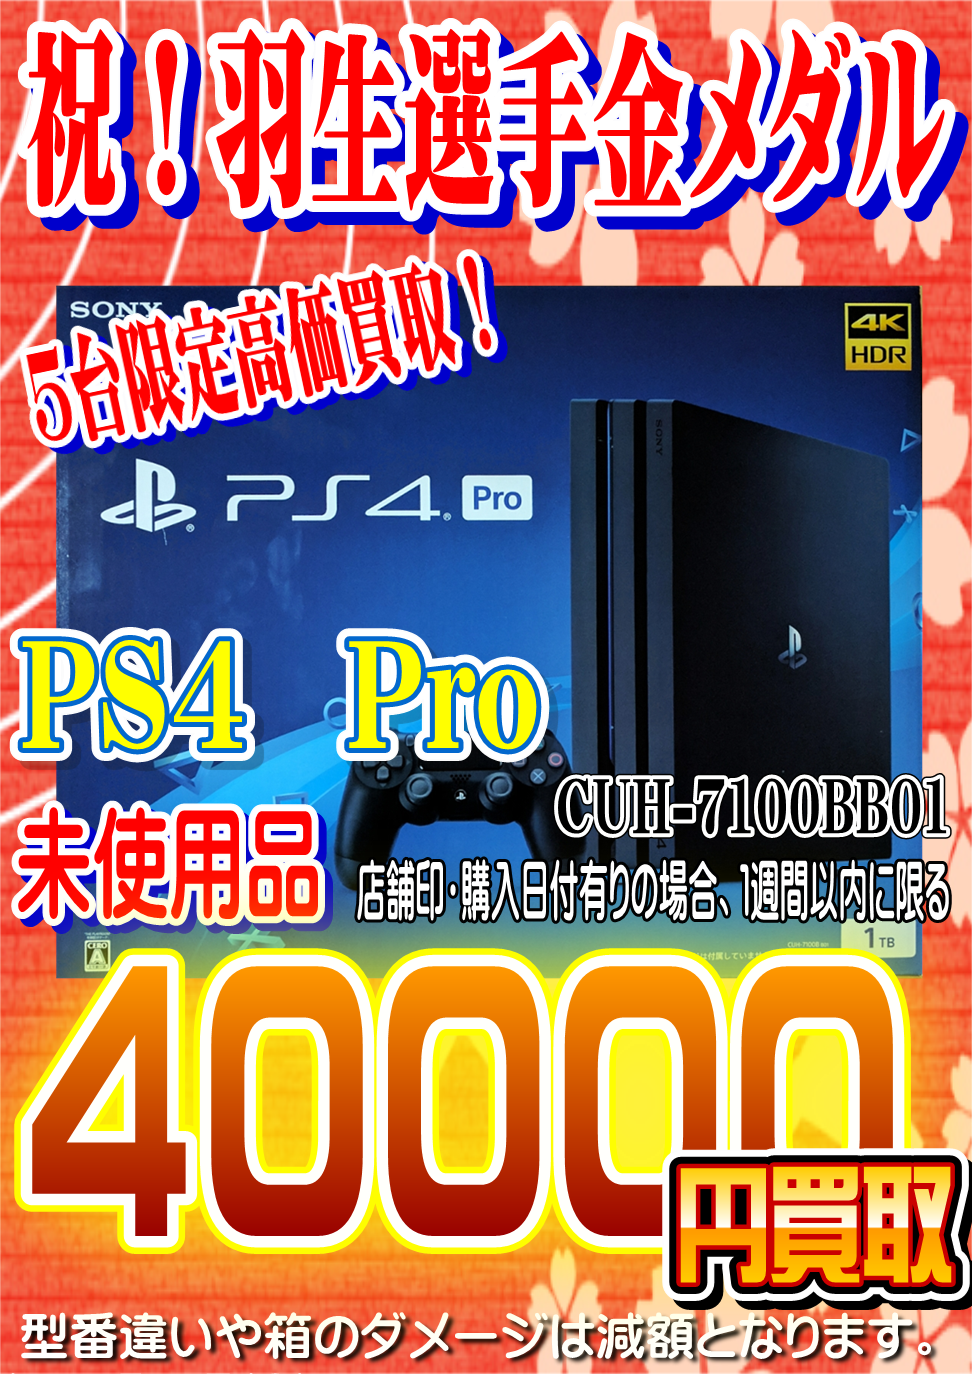 PS4本体高価買取Pro1TB500GB群馬栃木 | ガラクタ鑑定団カンケンプラザ 